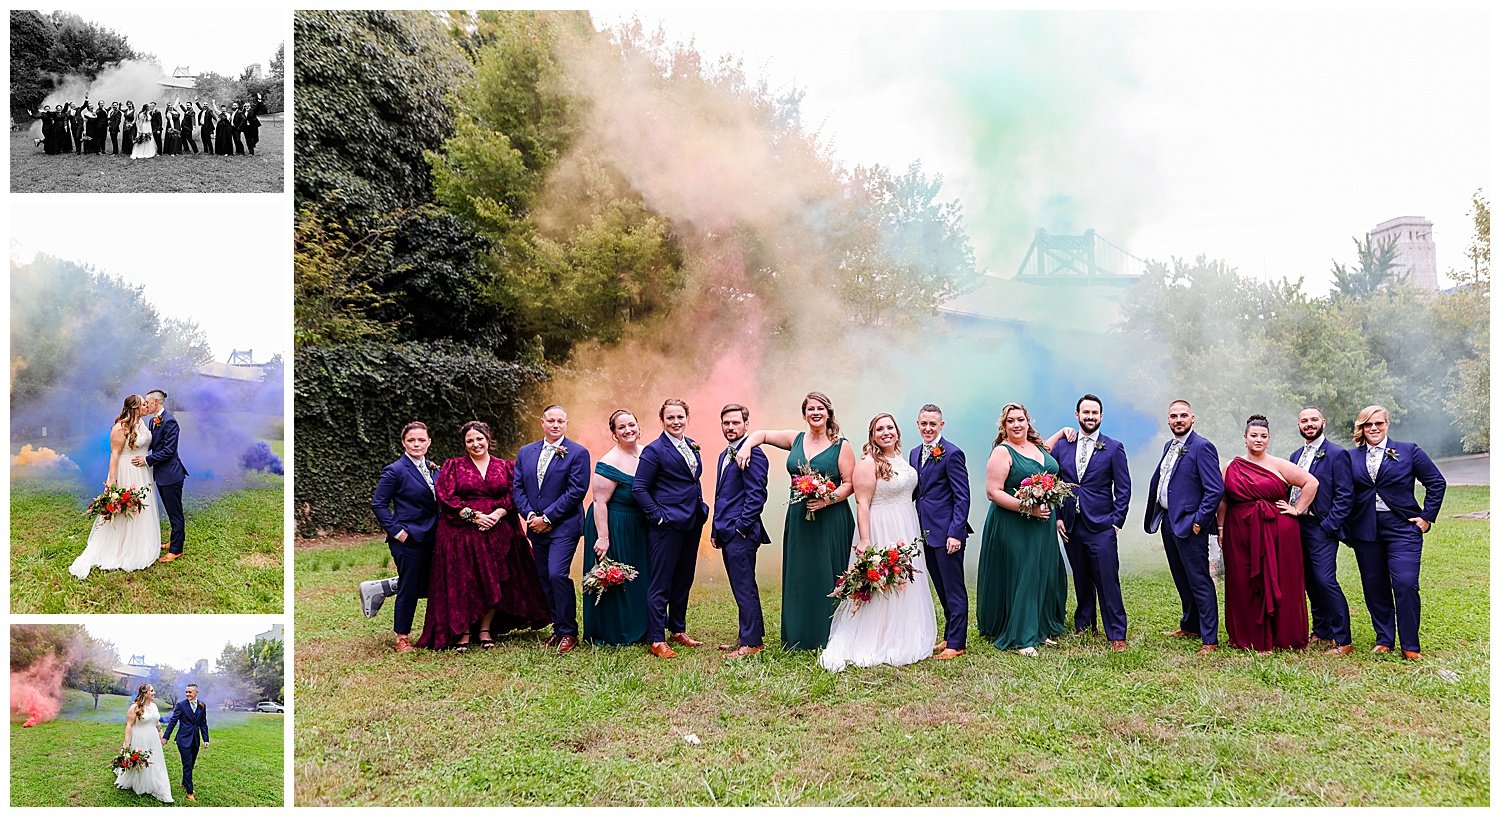 Old-city-philadelphia-wedding-photos-smoke-bombs-rainbow-lgbtq